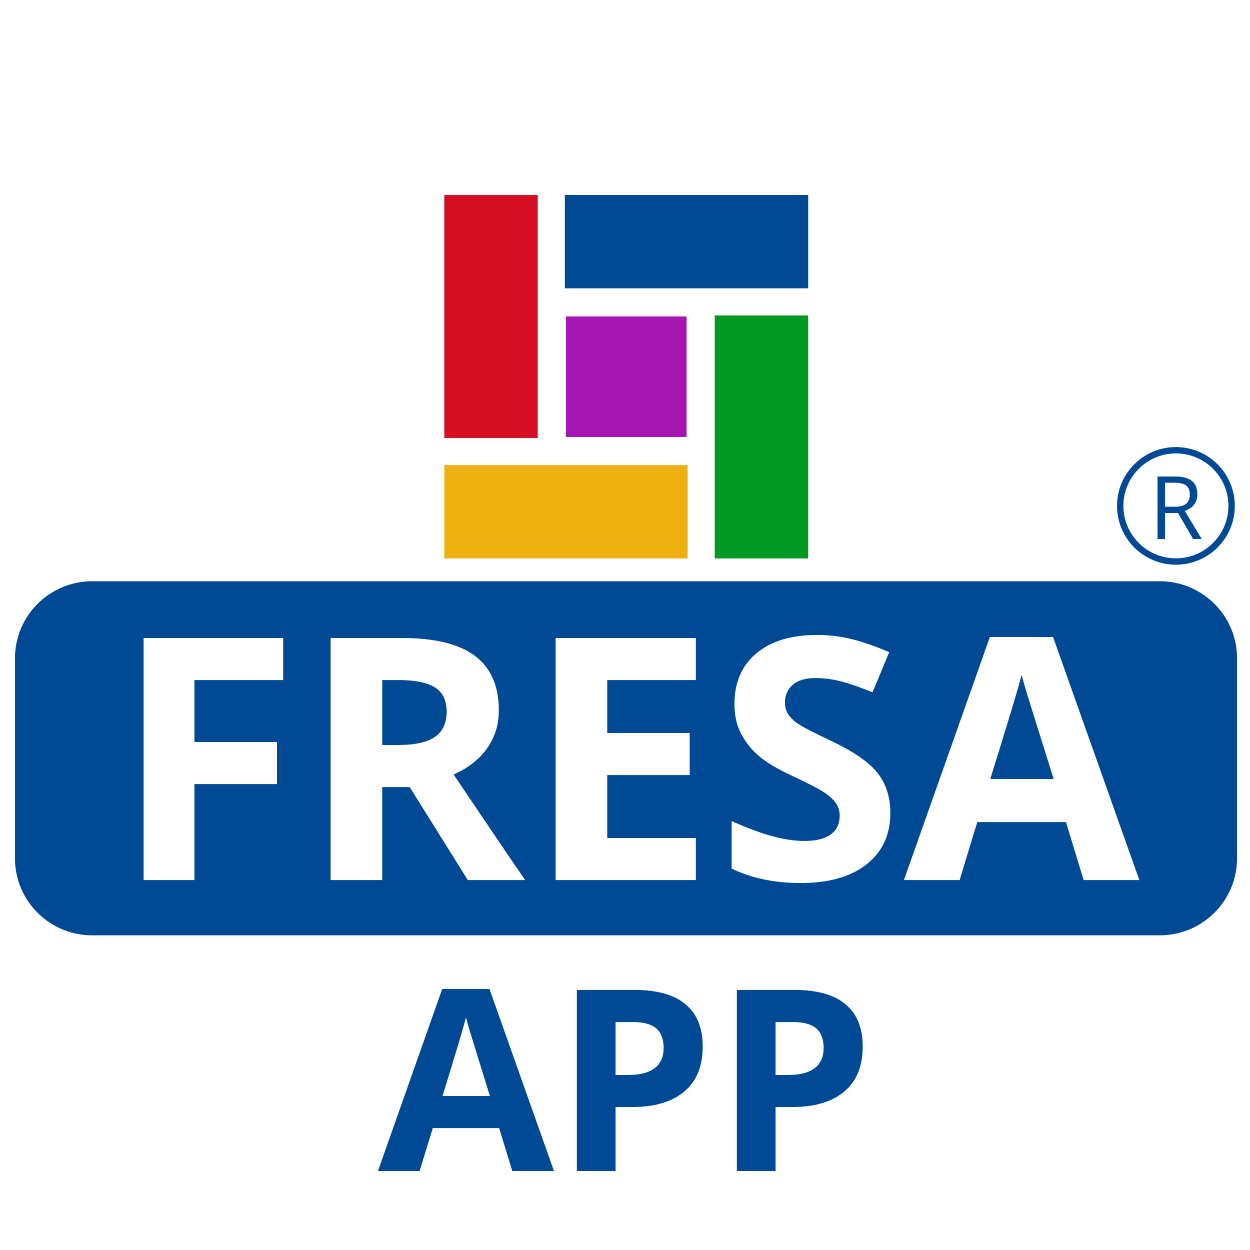 fresa-app